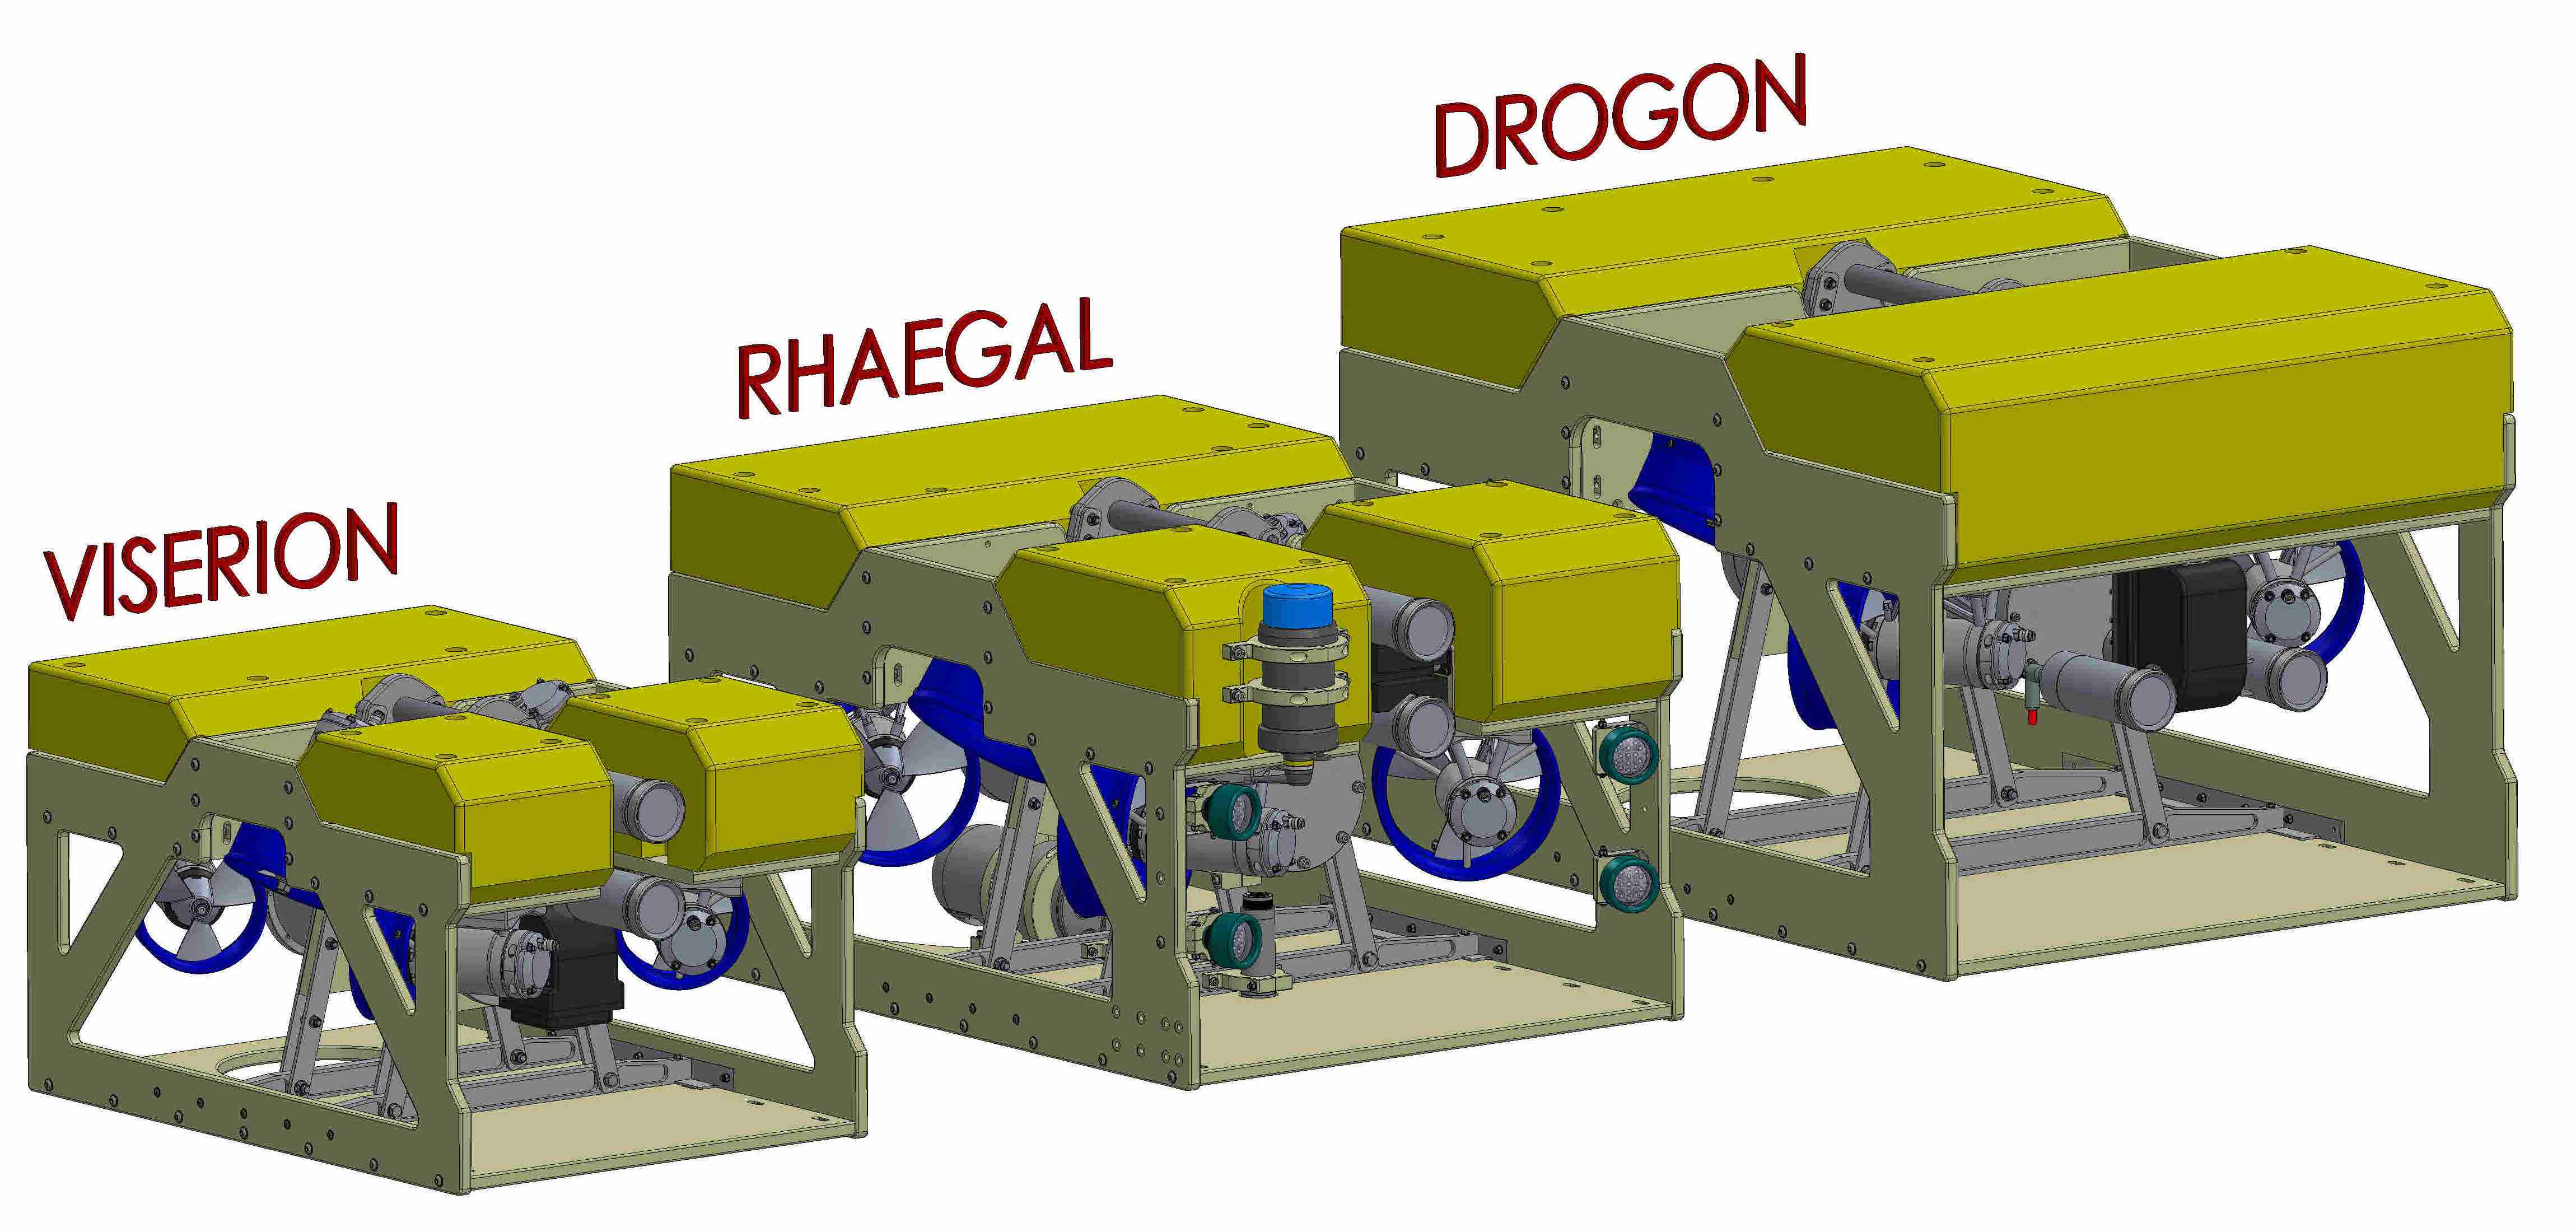 Dragon ROV's range of open frame vehicles